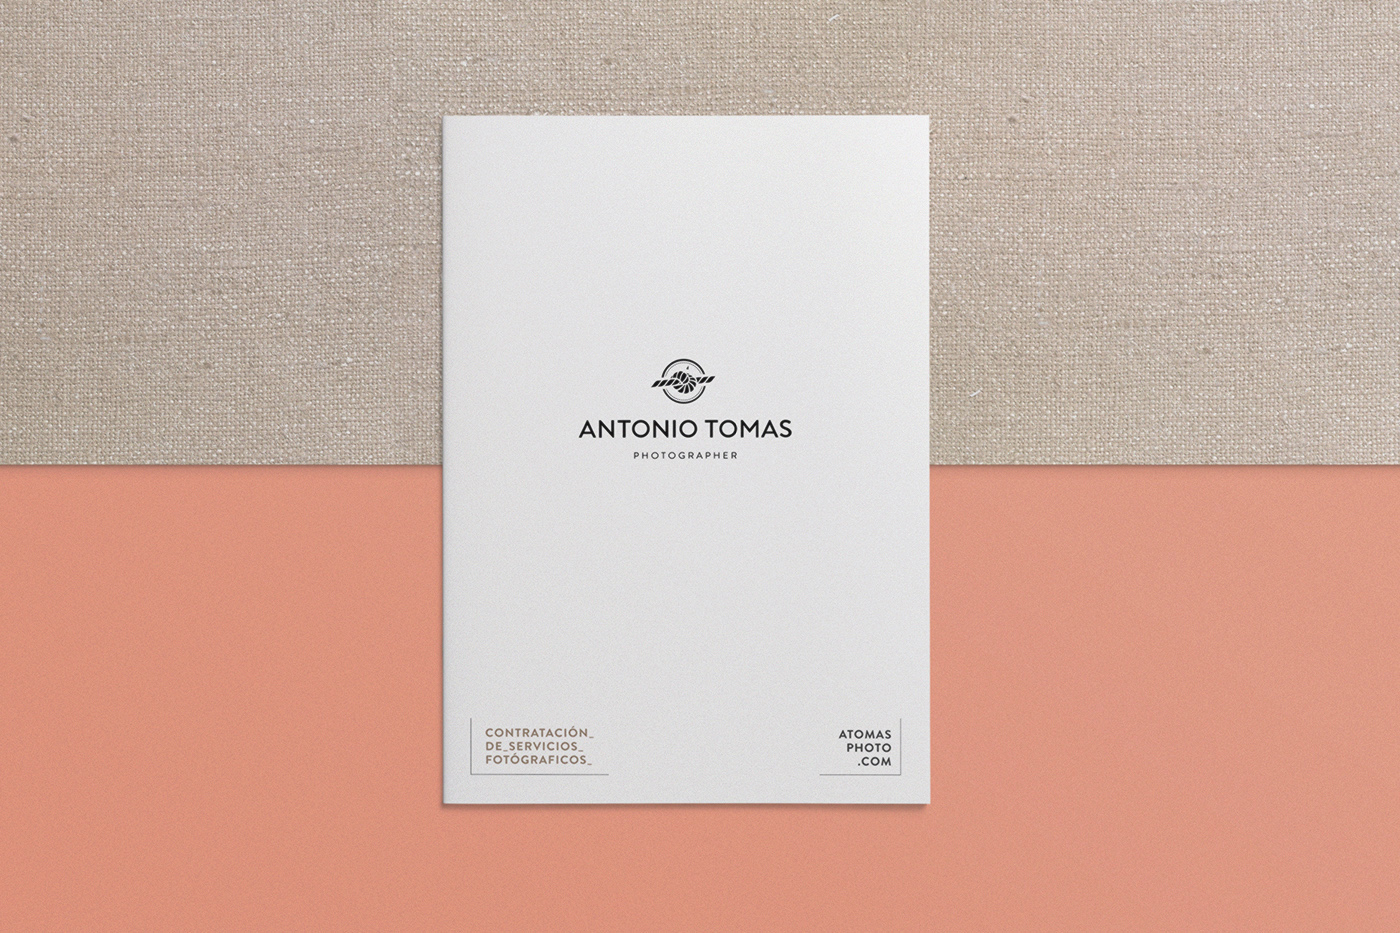 Antonio Tomas contrato 1